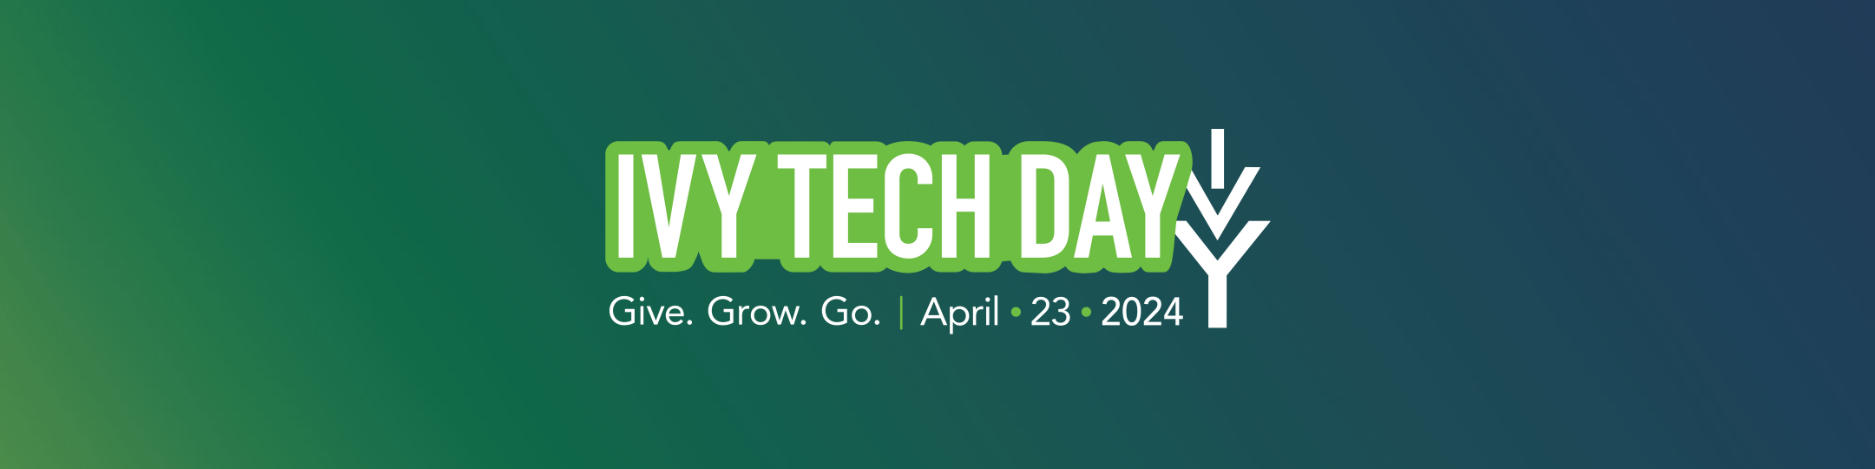 Ivy Tech Day Website Content